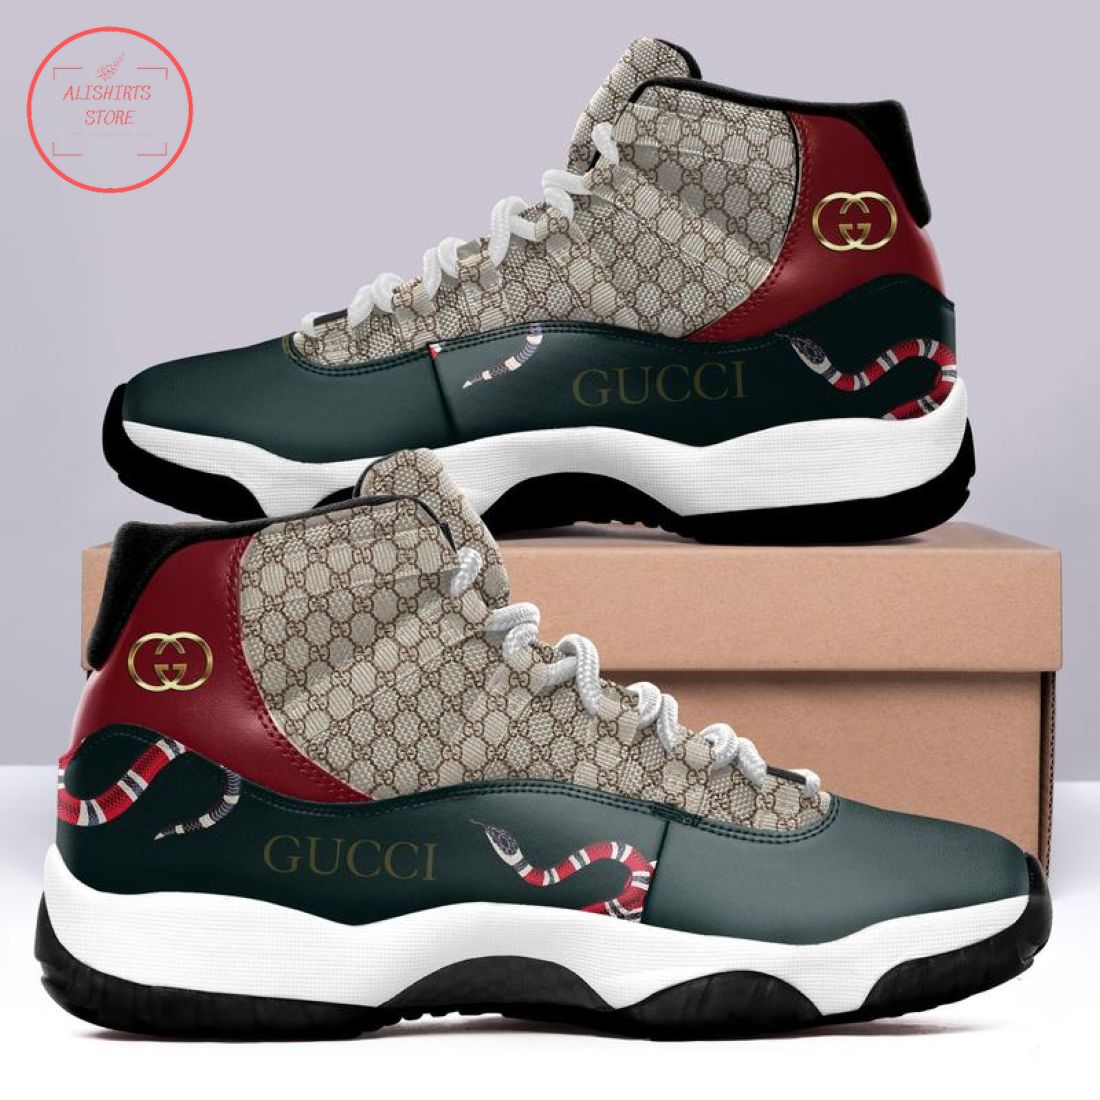 Gucci Snake Air Jordan 11 Luxury Sneaker Shoes